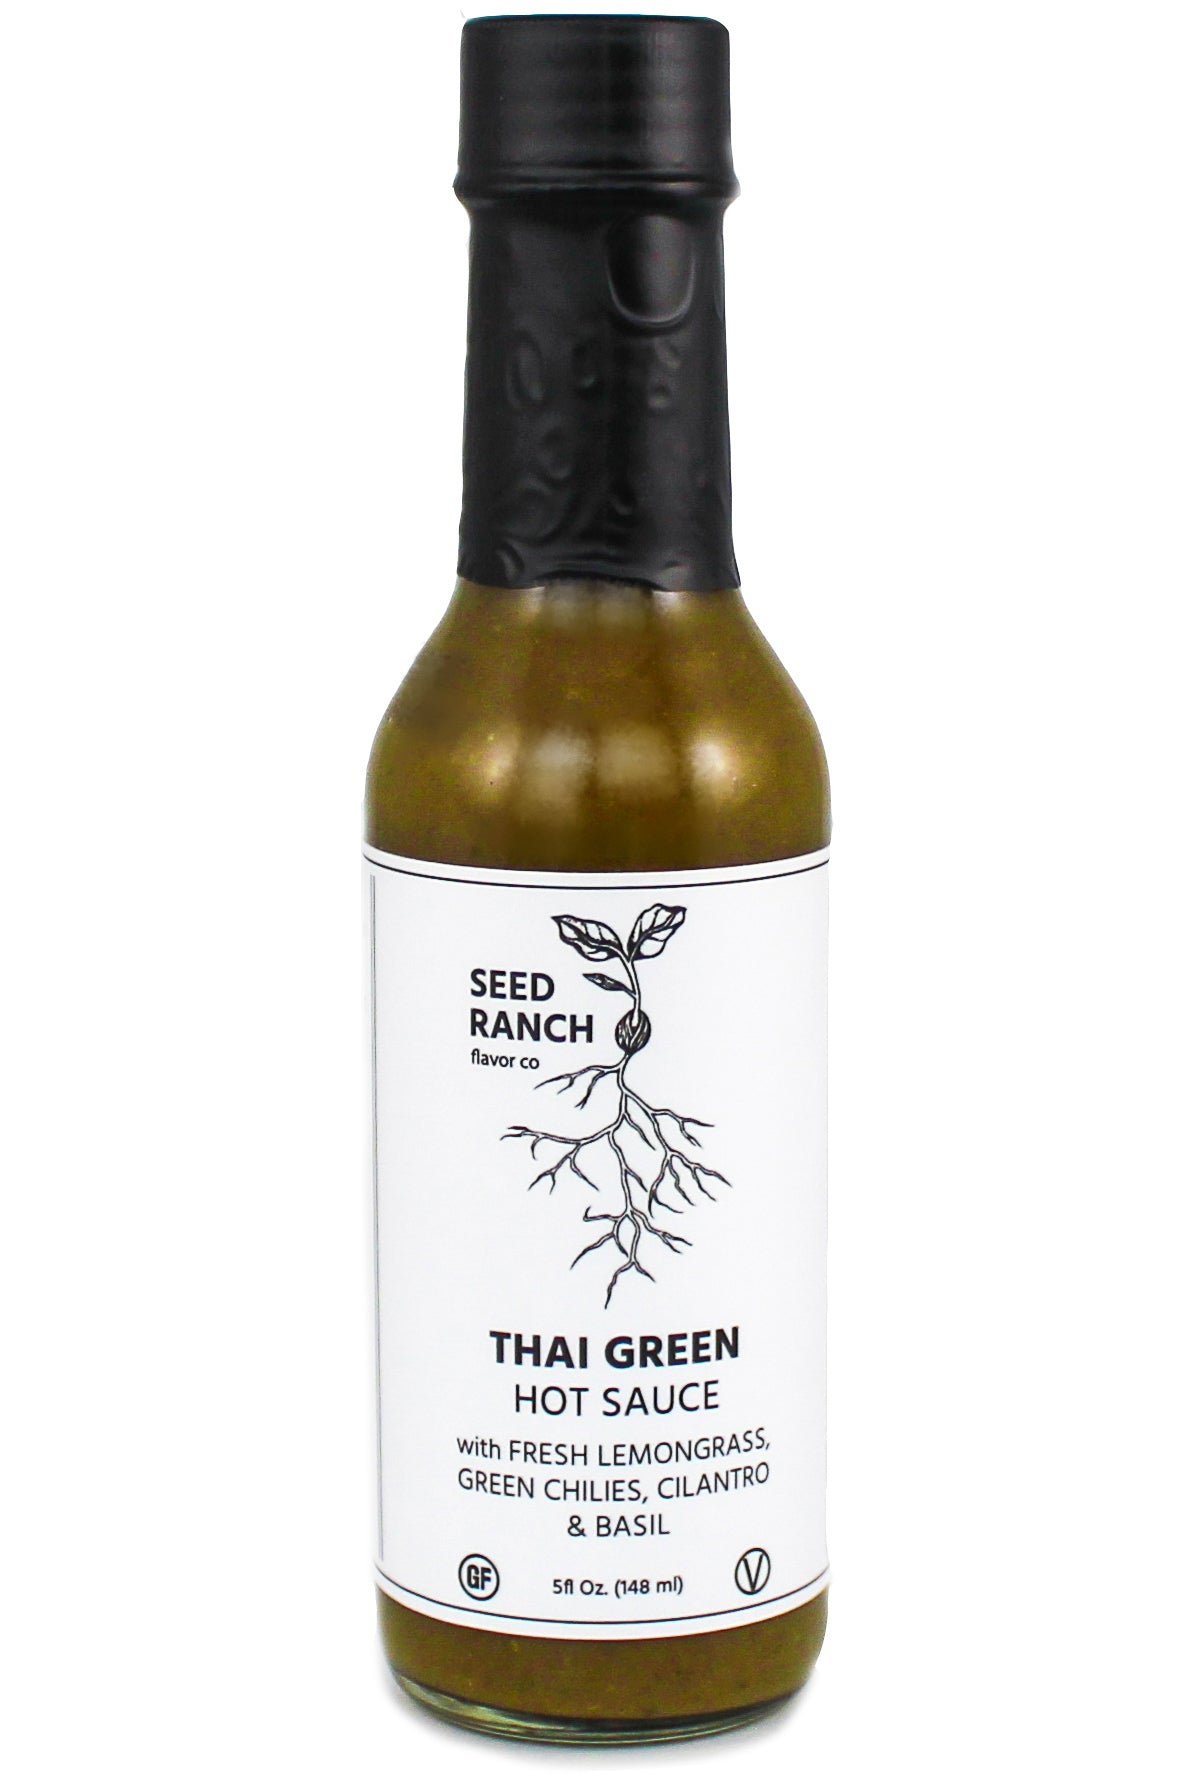 Thai Green Hot Sauce - Mild/Medium